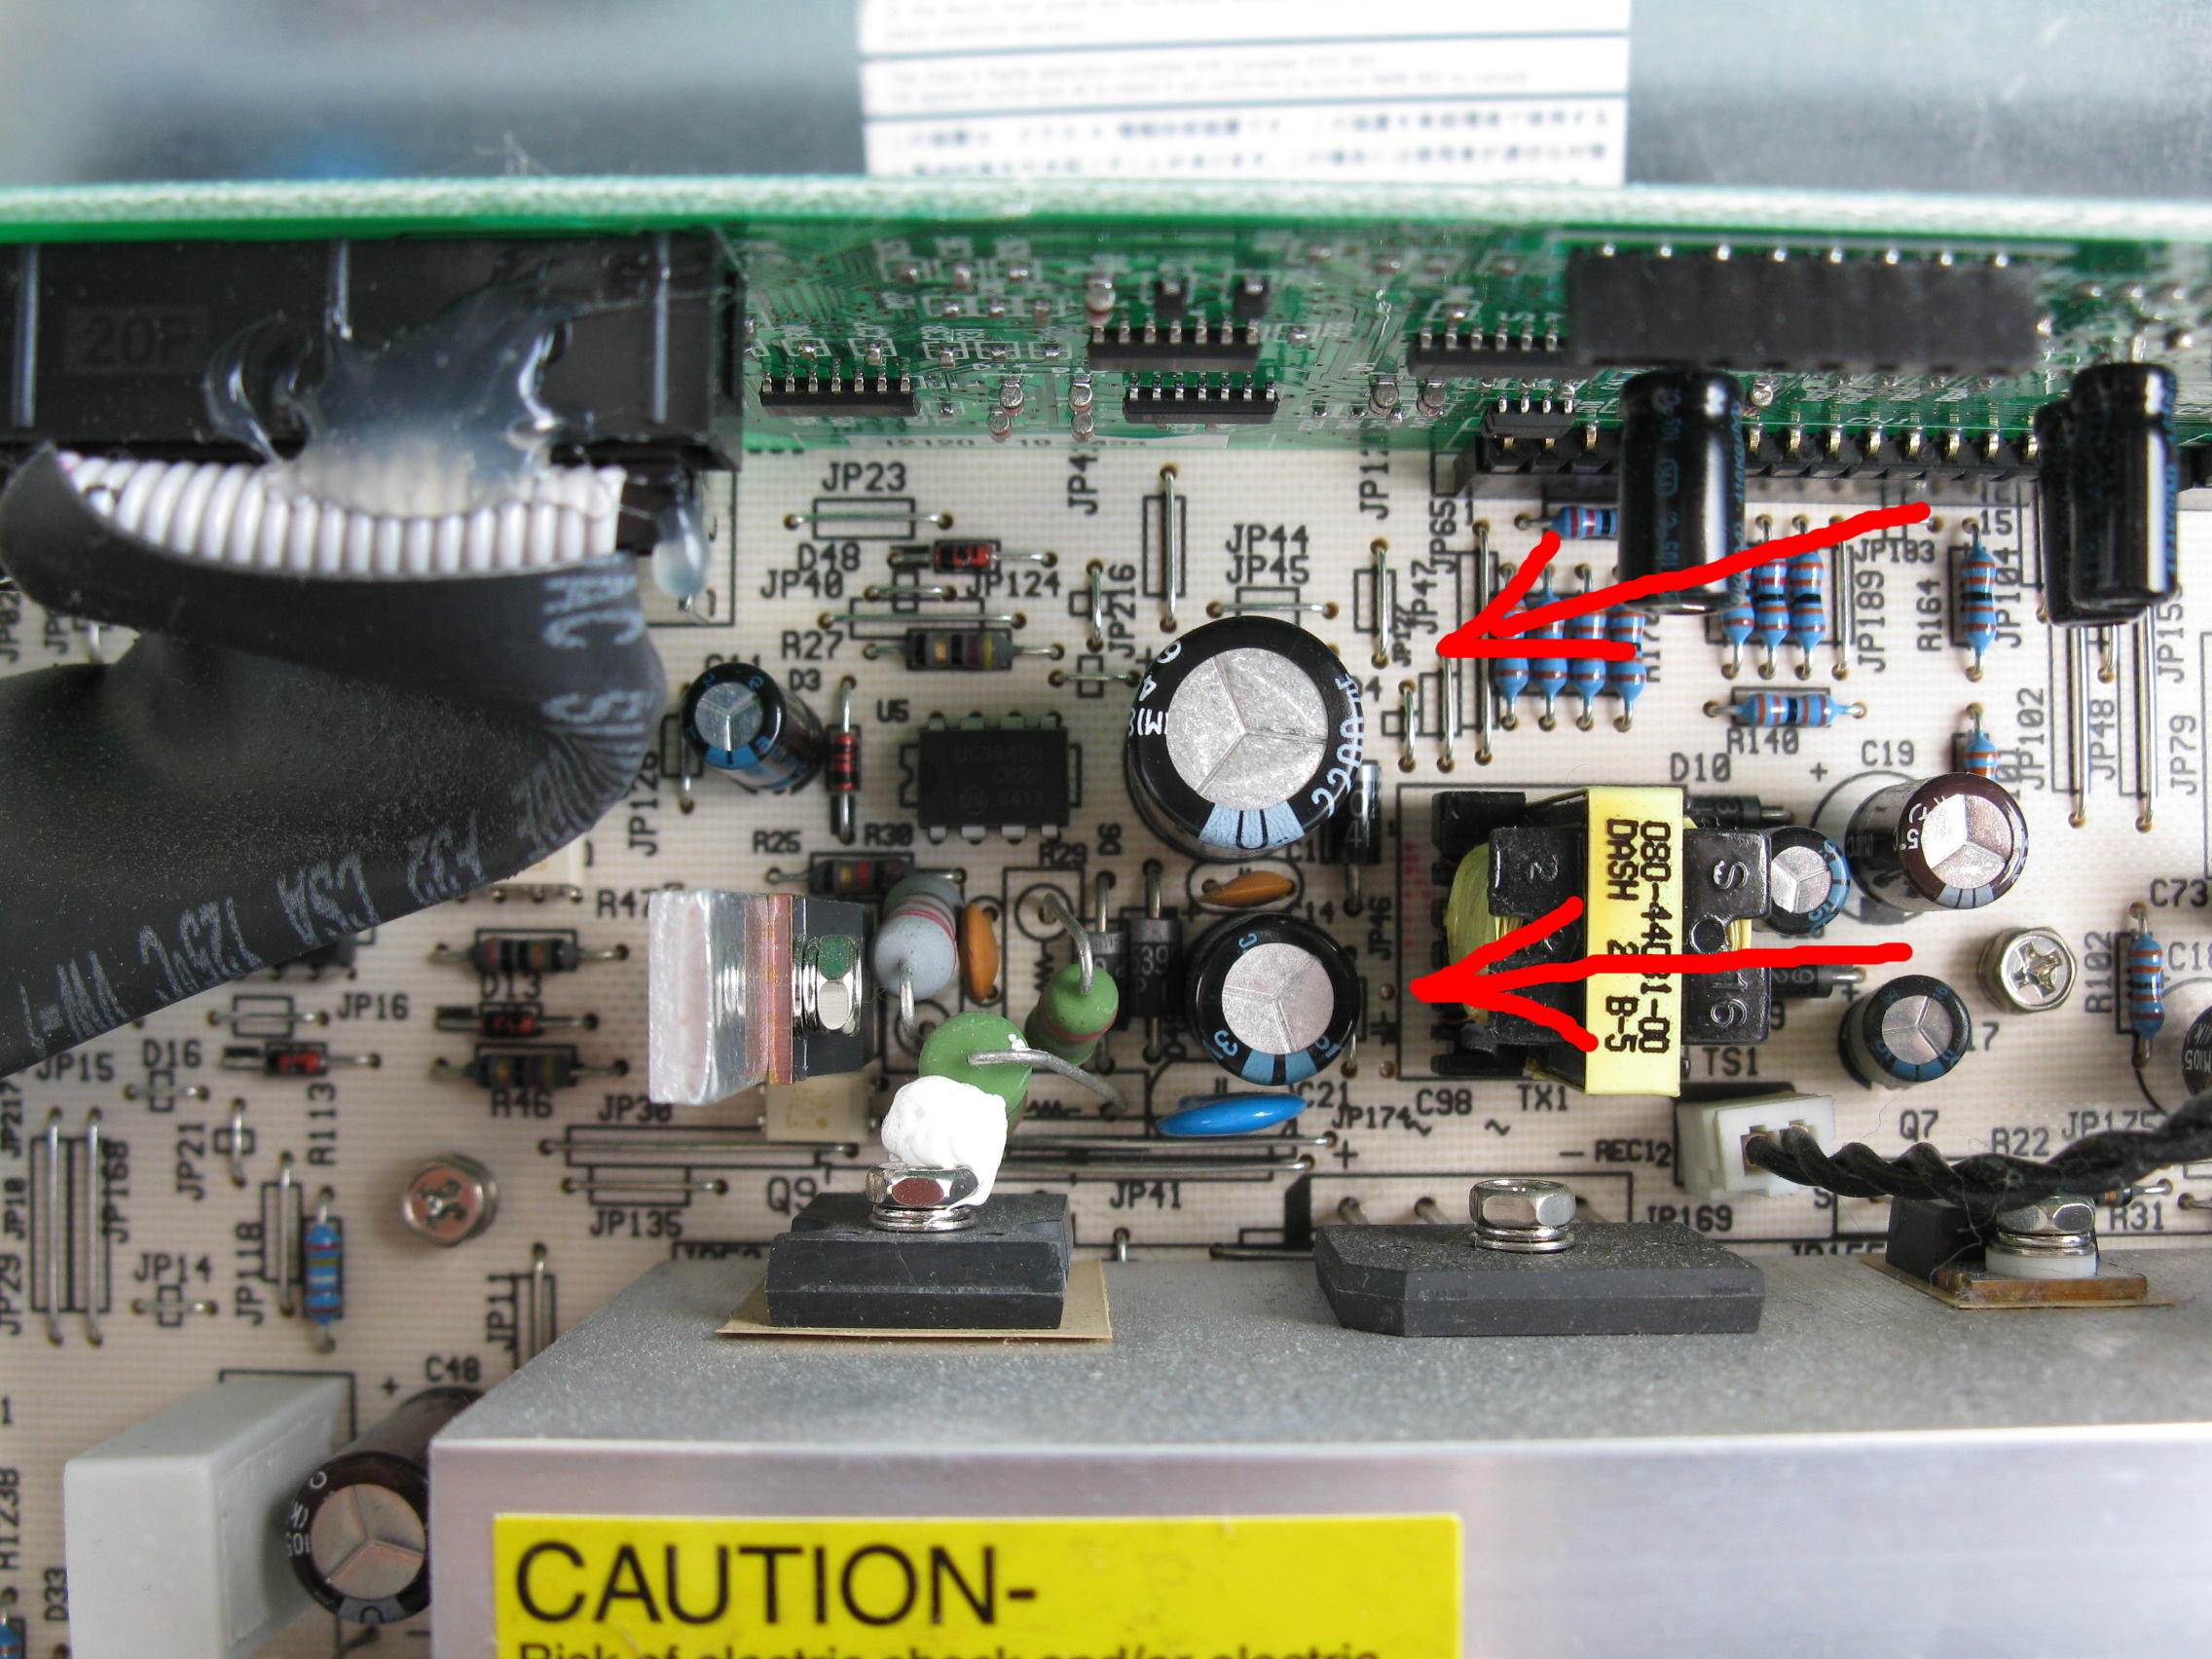 Powerware 9120 700VA UPS: DC bus fault